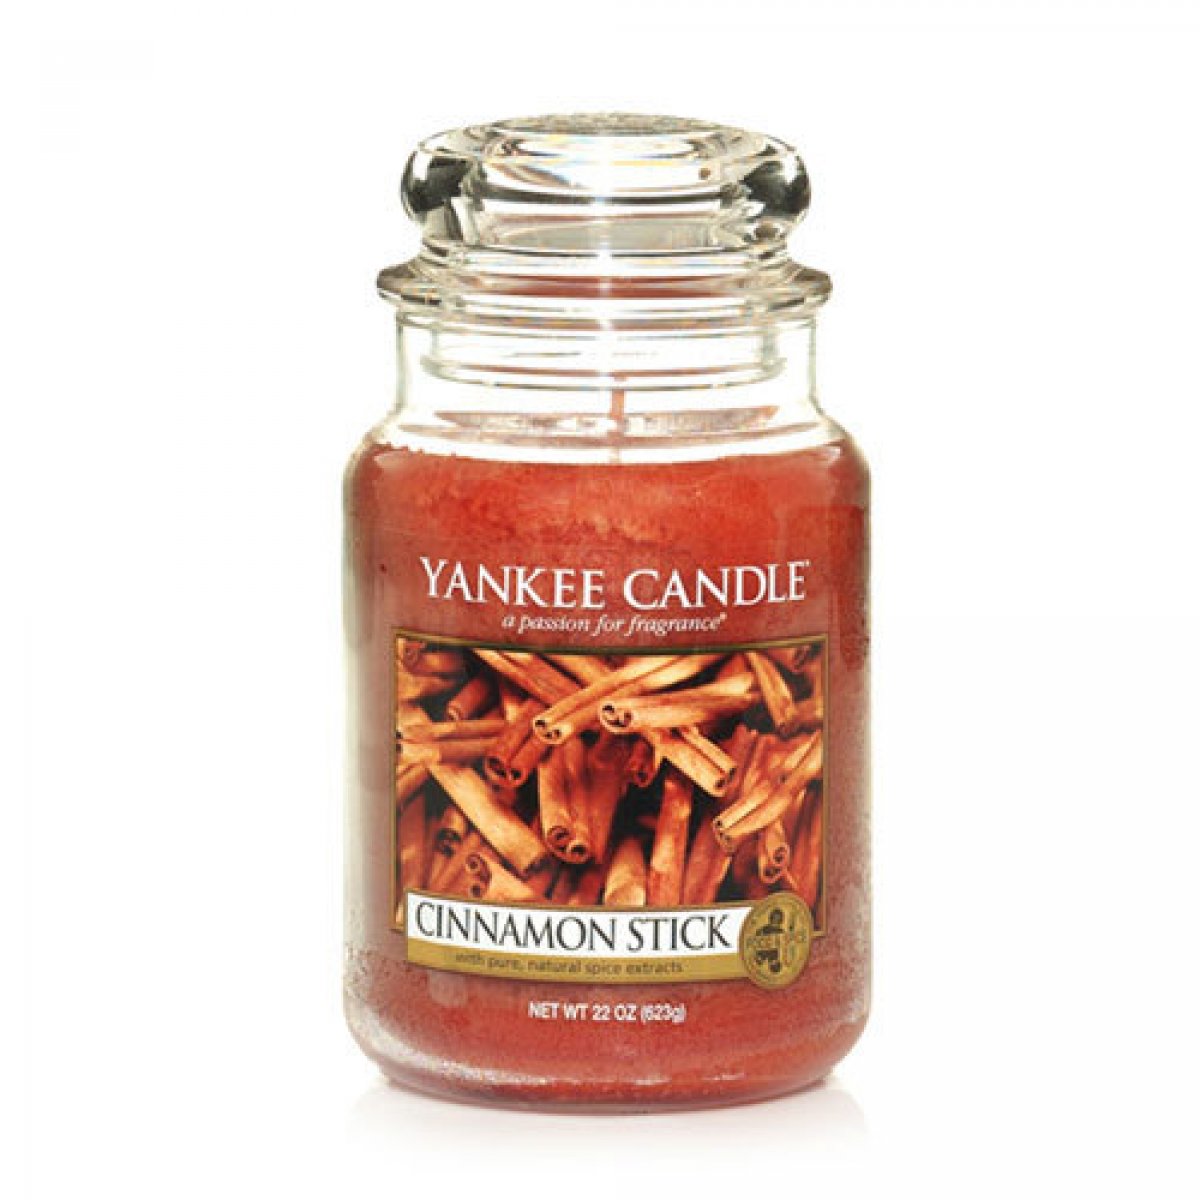 Giara grande Yankee Candle Cinnamon Stick Fragranza dolce speziata